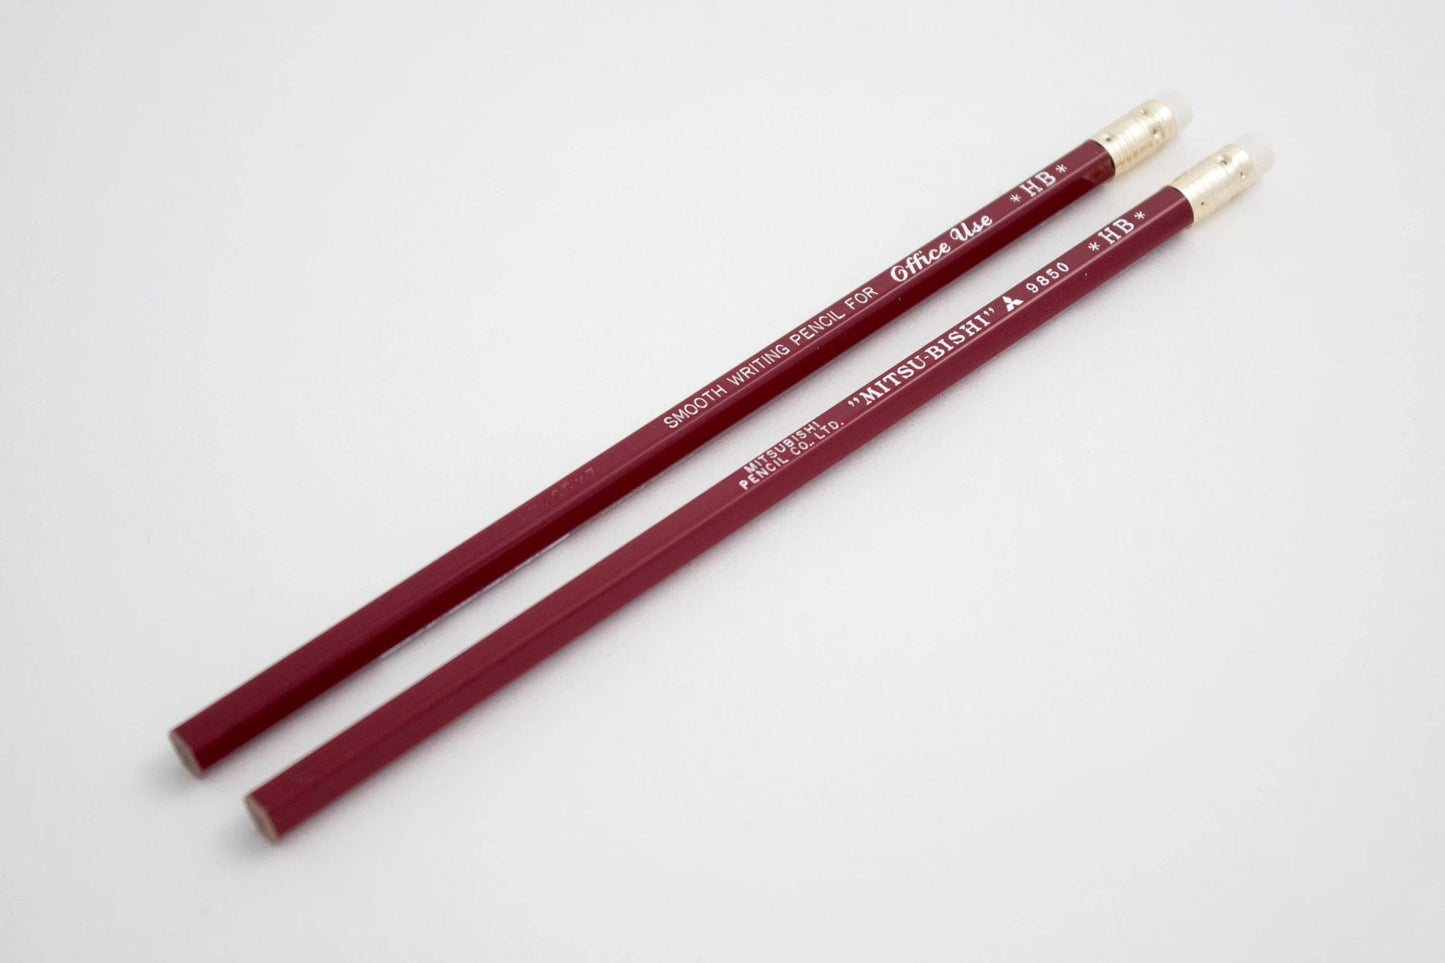 Mitsubishi 9850 HB Pencils 12ct